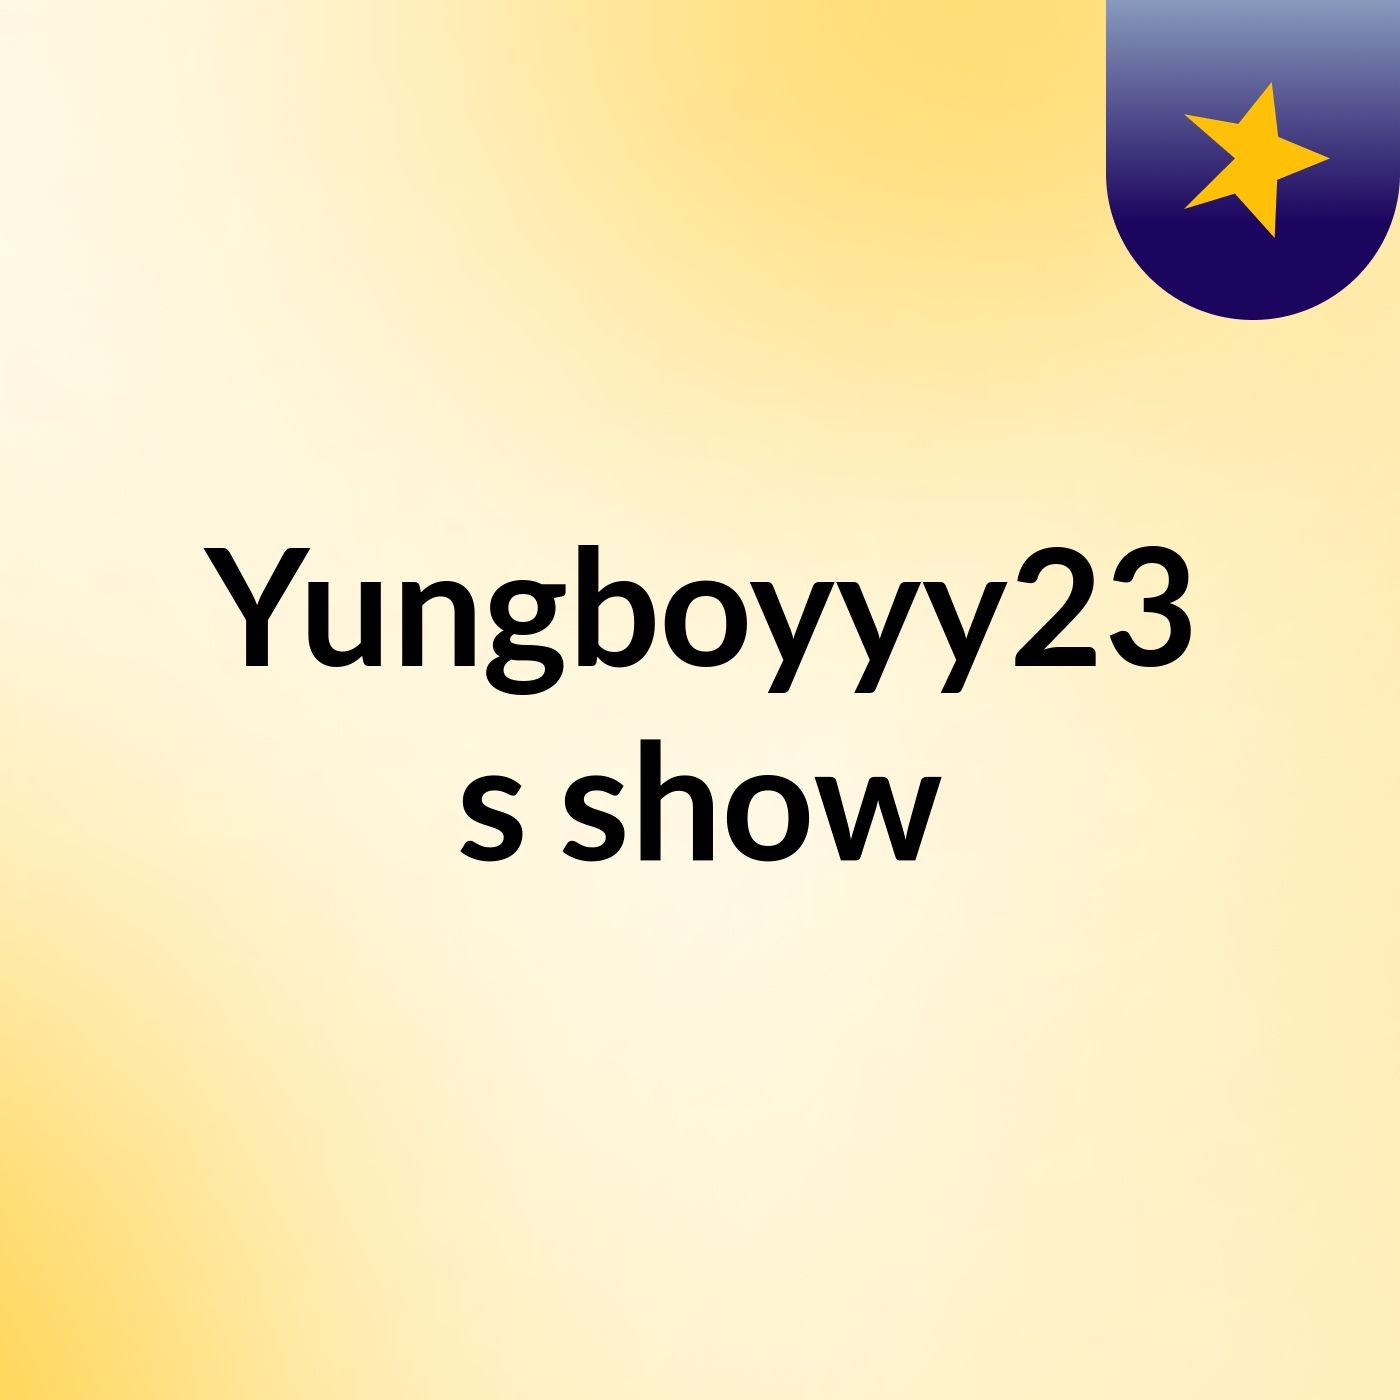 Yungboyyy23's show